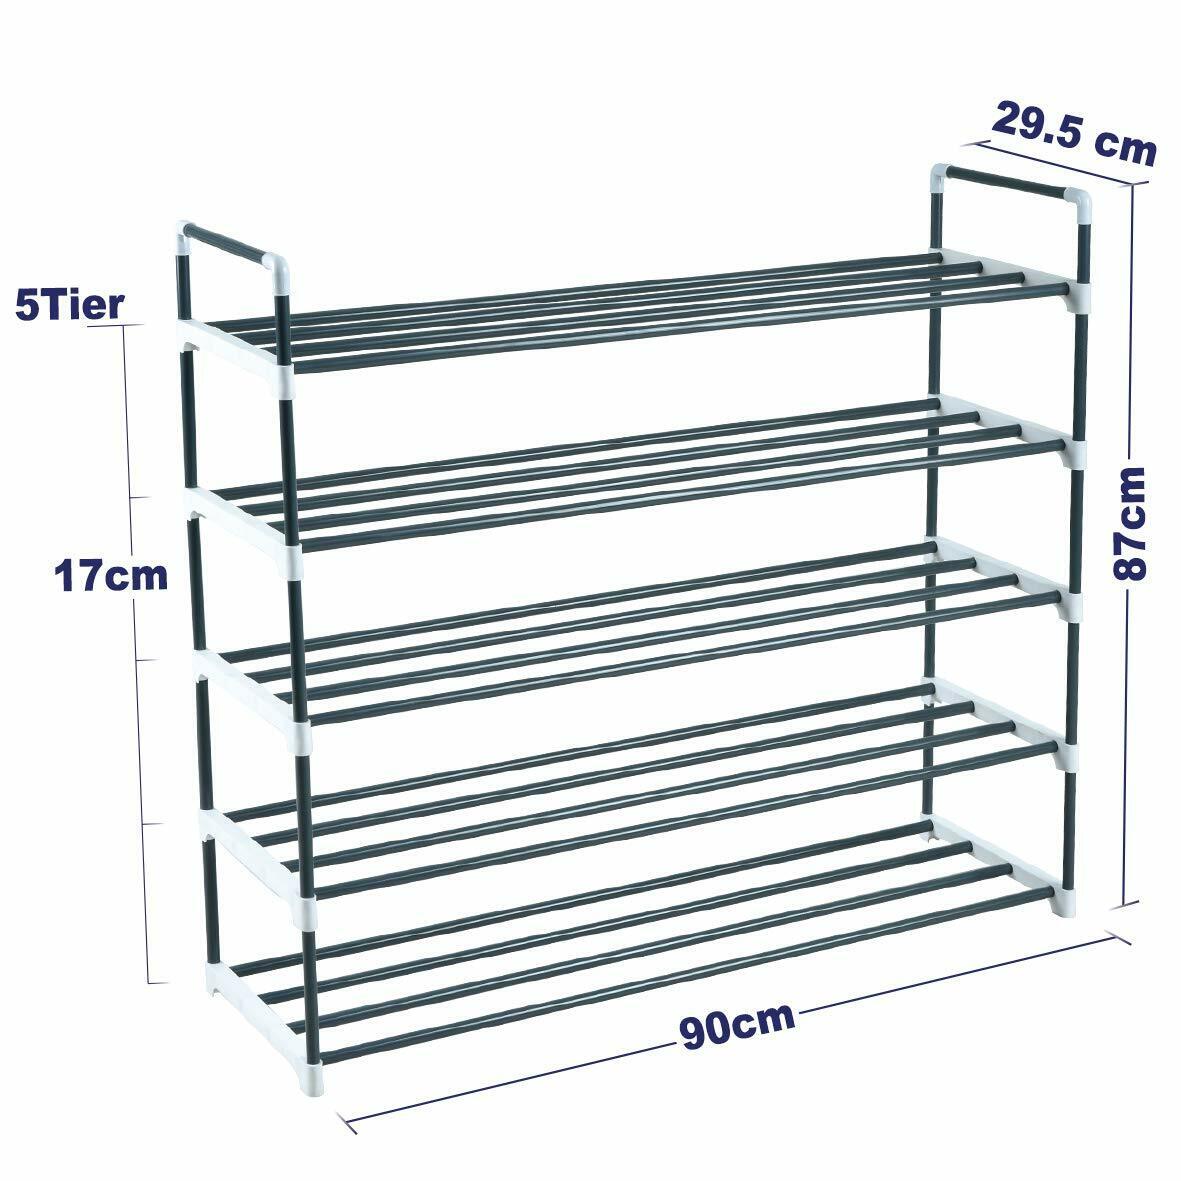 5 Tier Shoe Stand Storage Organiser Rack Compact Space Save Shelf HEAVY DUTY